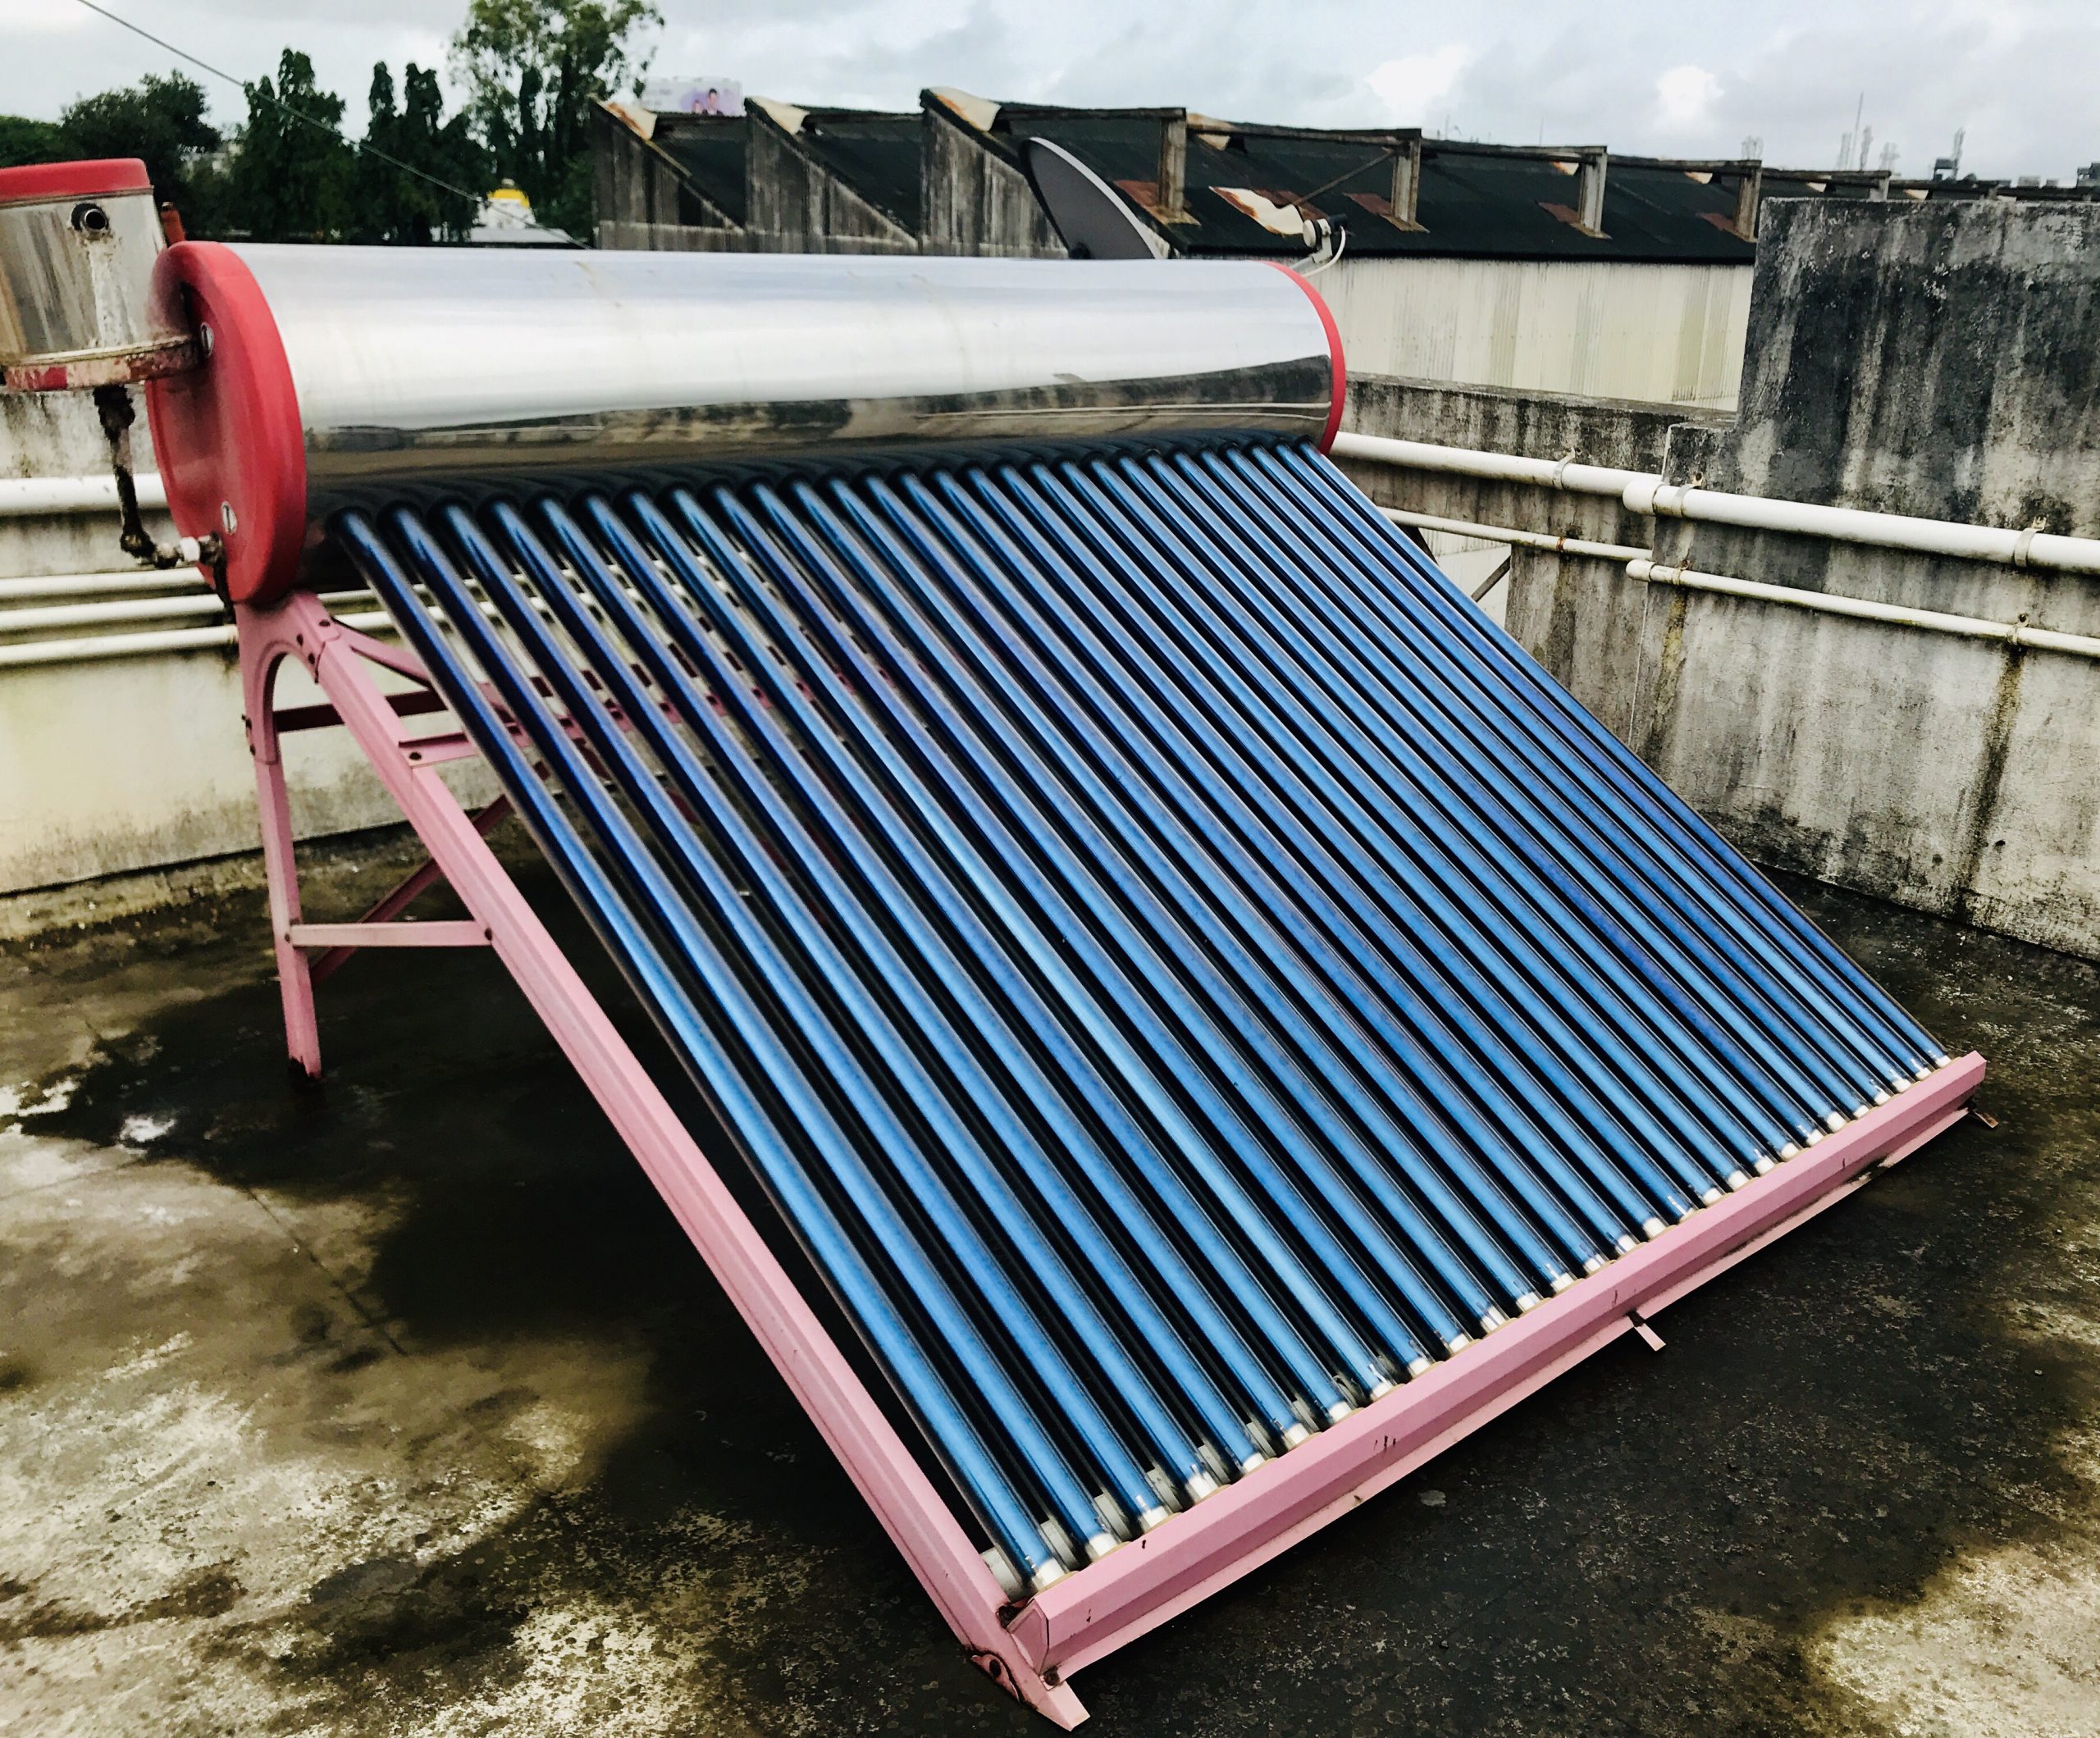 solar water heater in a terrace 2021 09 03 19 21 35 utc scaled